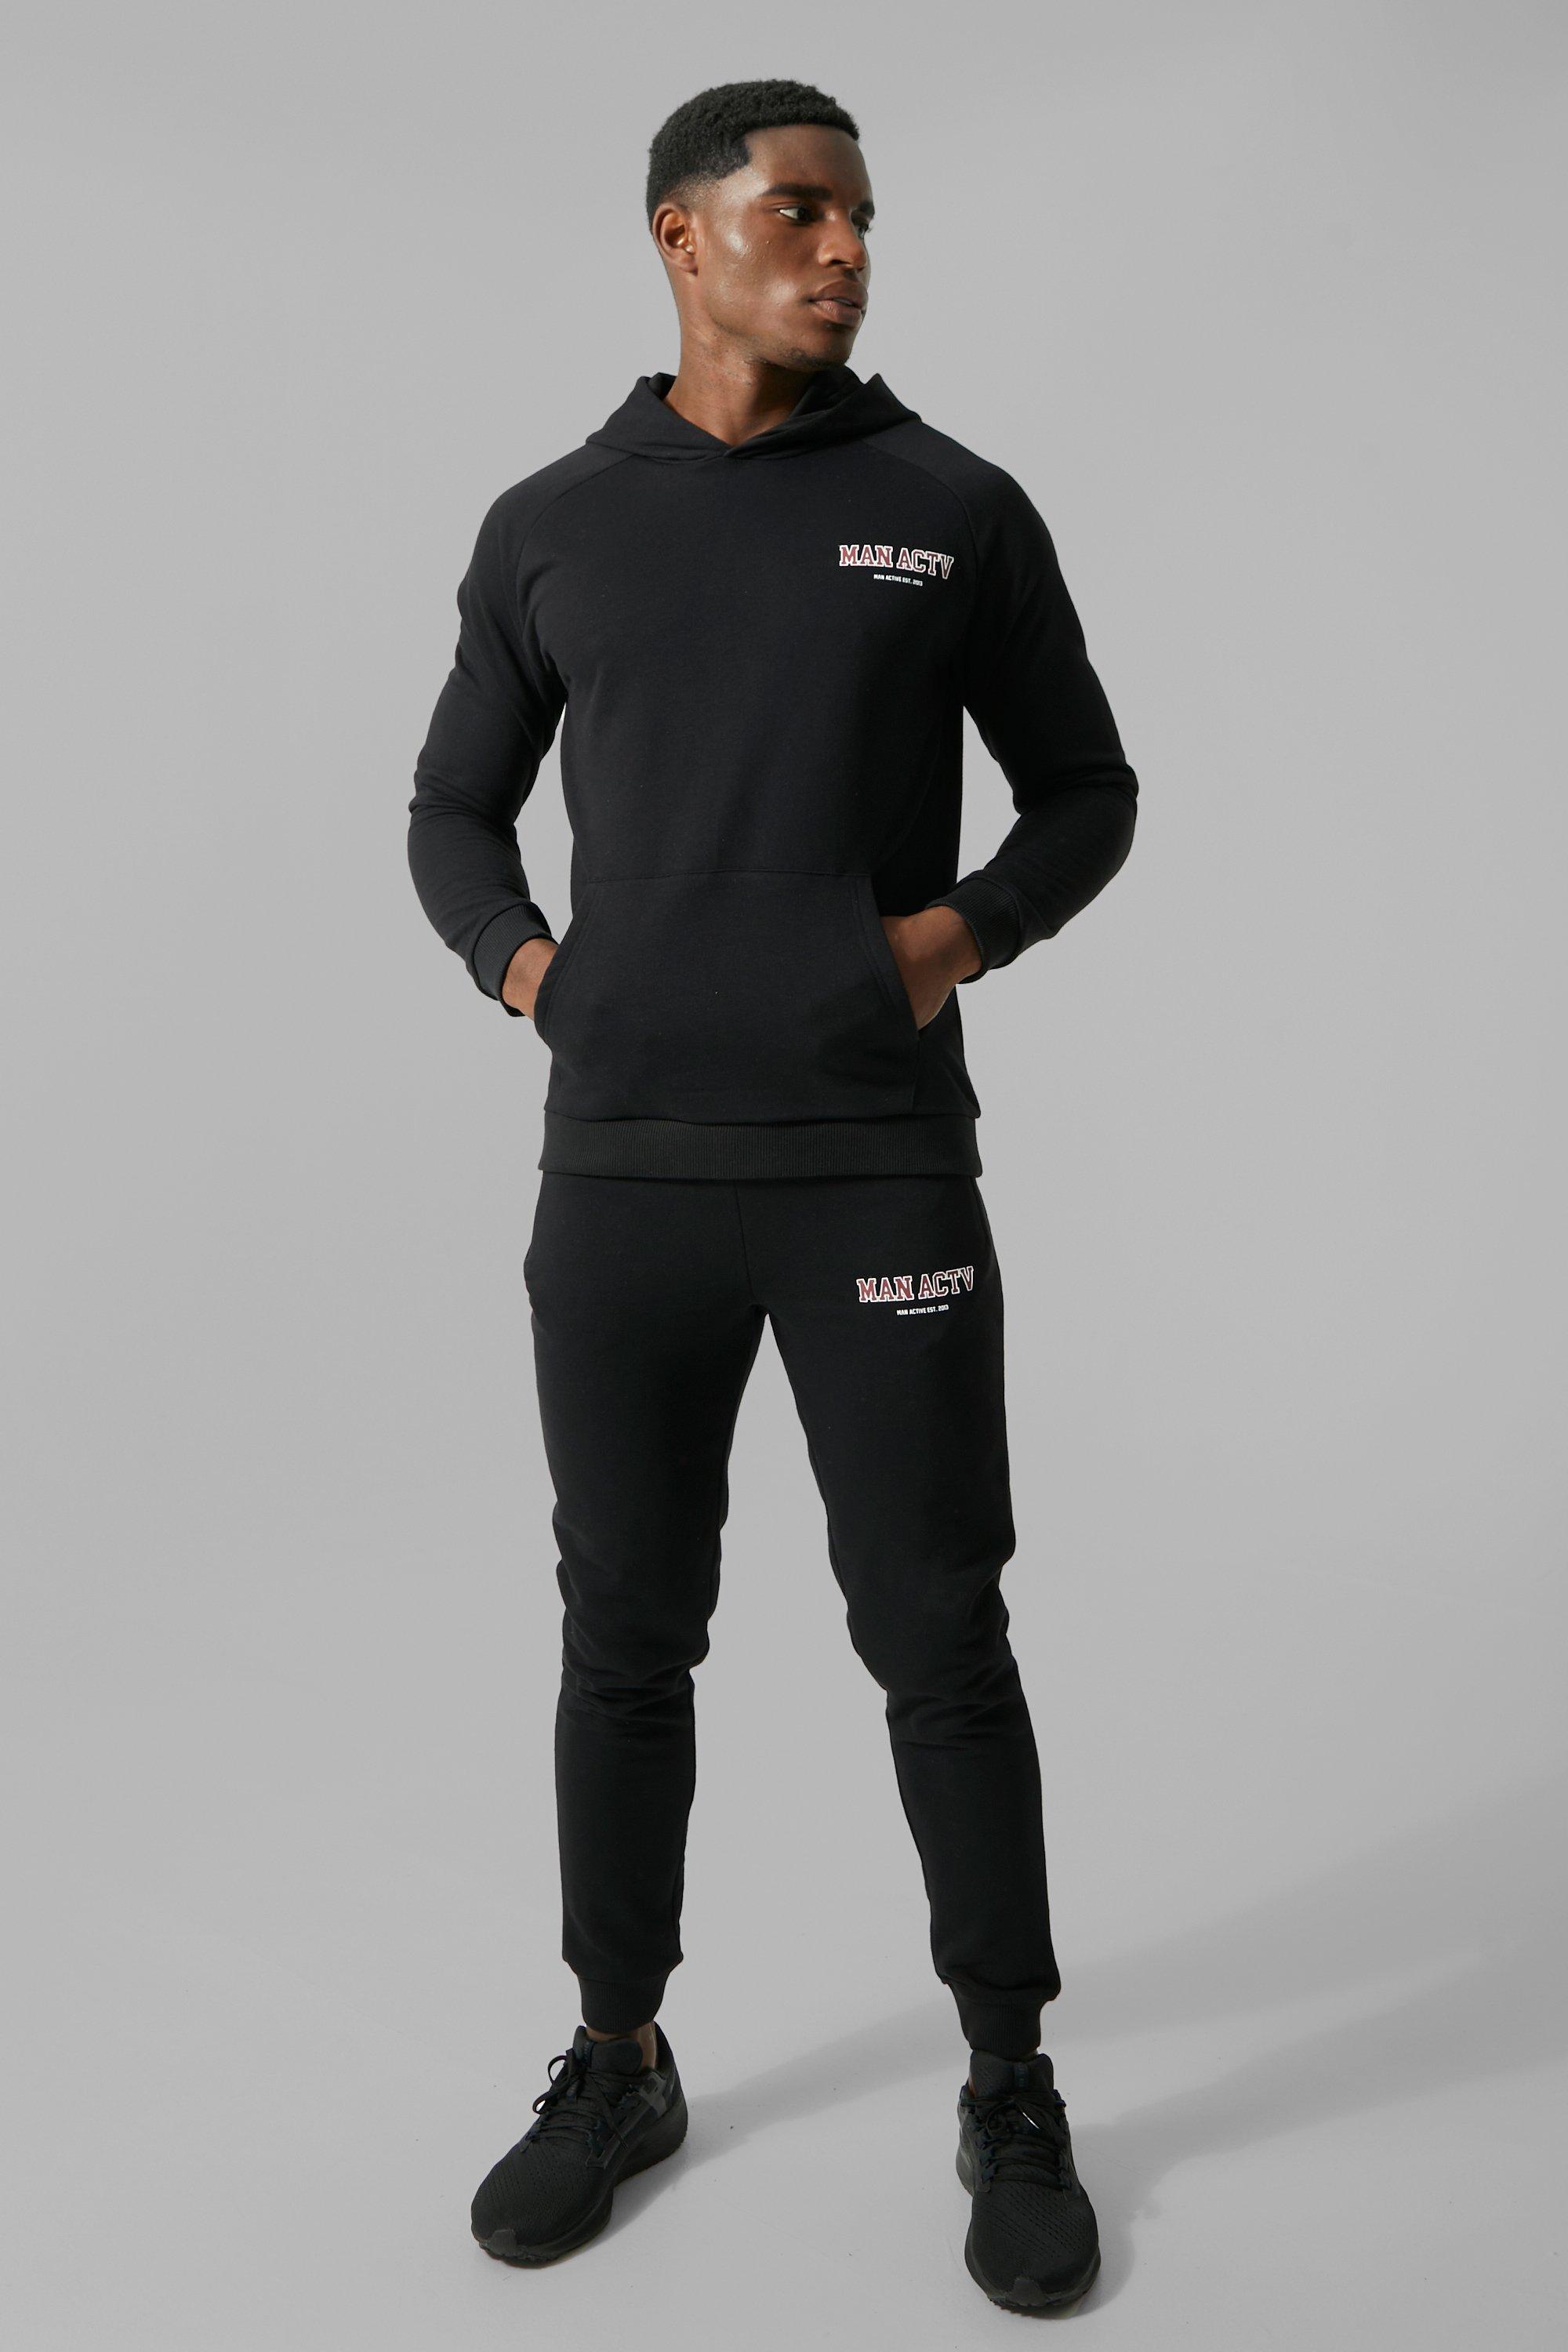 Man Active Gym Athletic Trainingsanzug Mit Kapuze - Black - L, Black